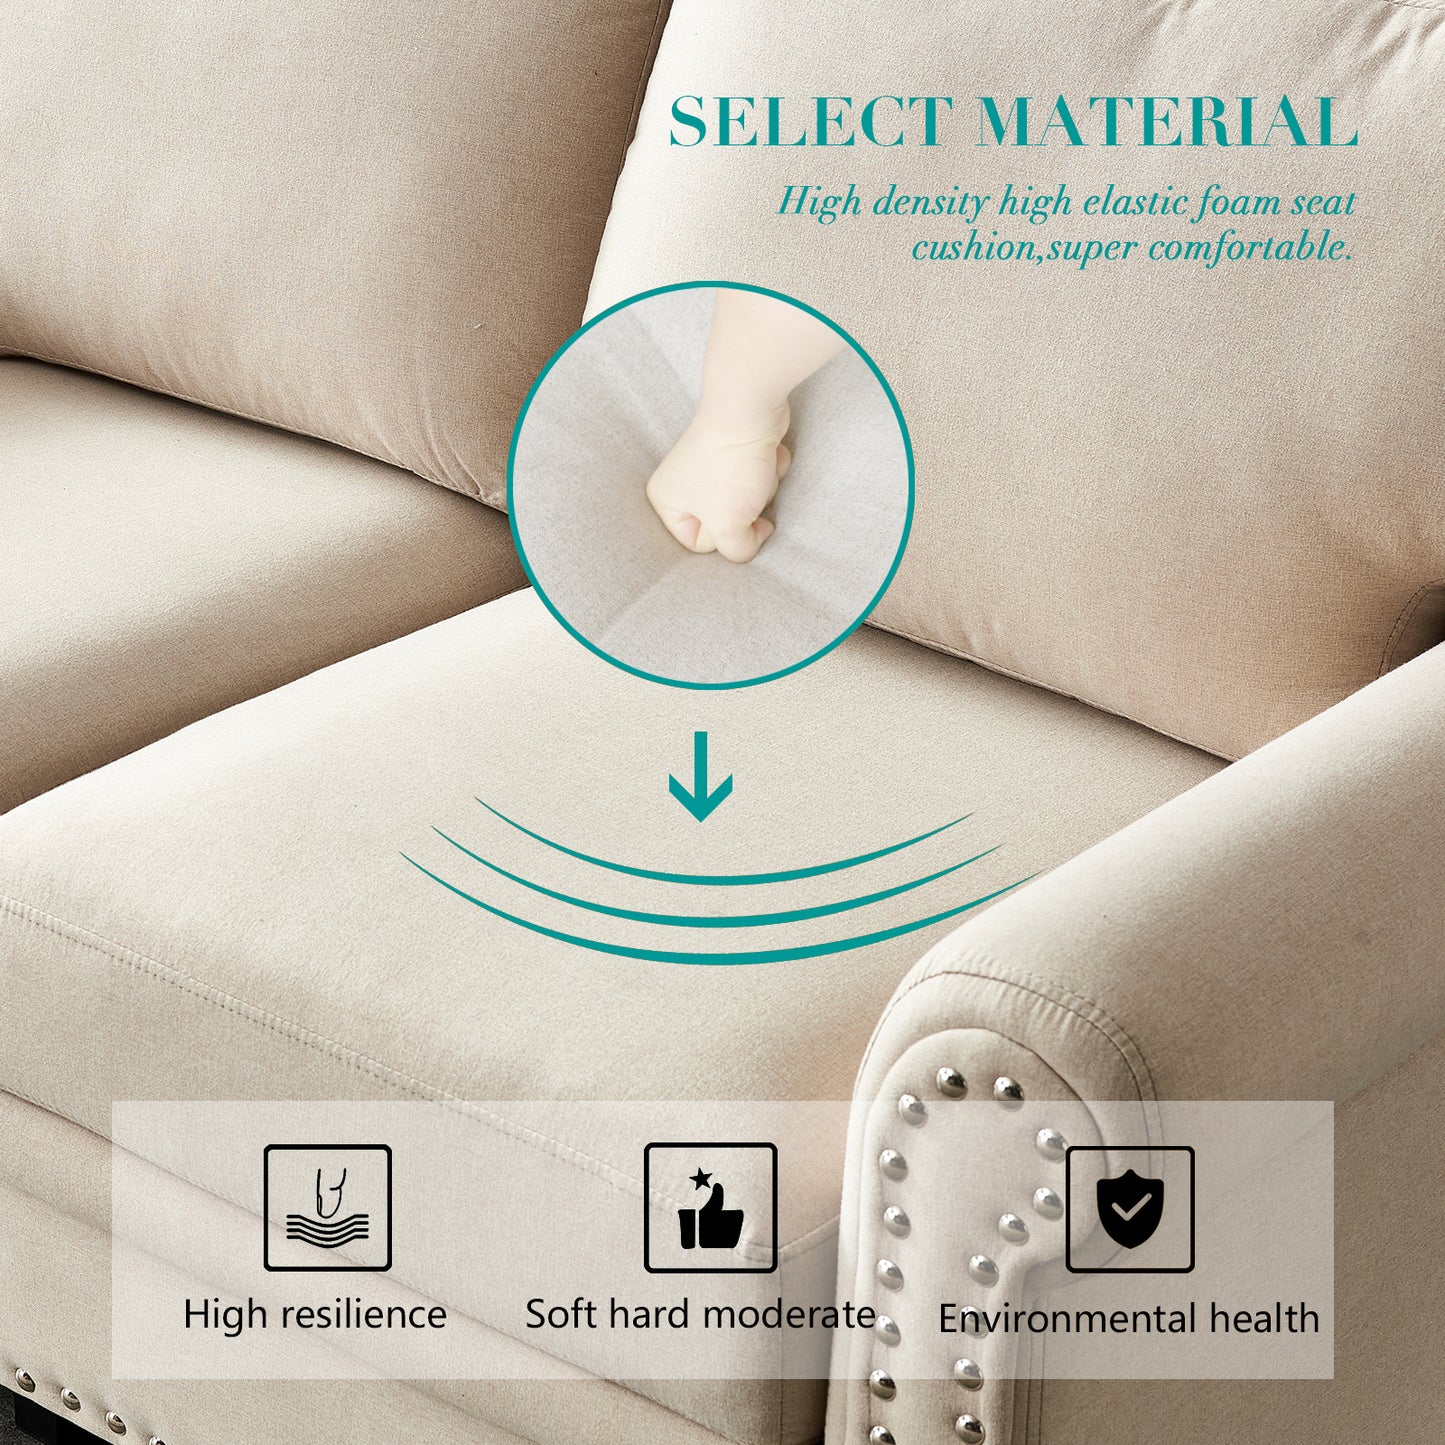 Beige Linen Fabric Upholstered Storage Sofa